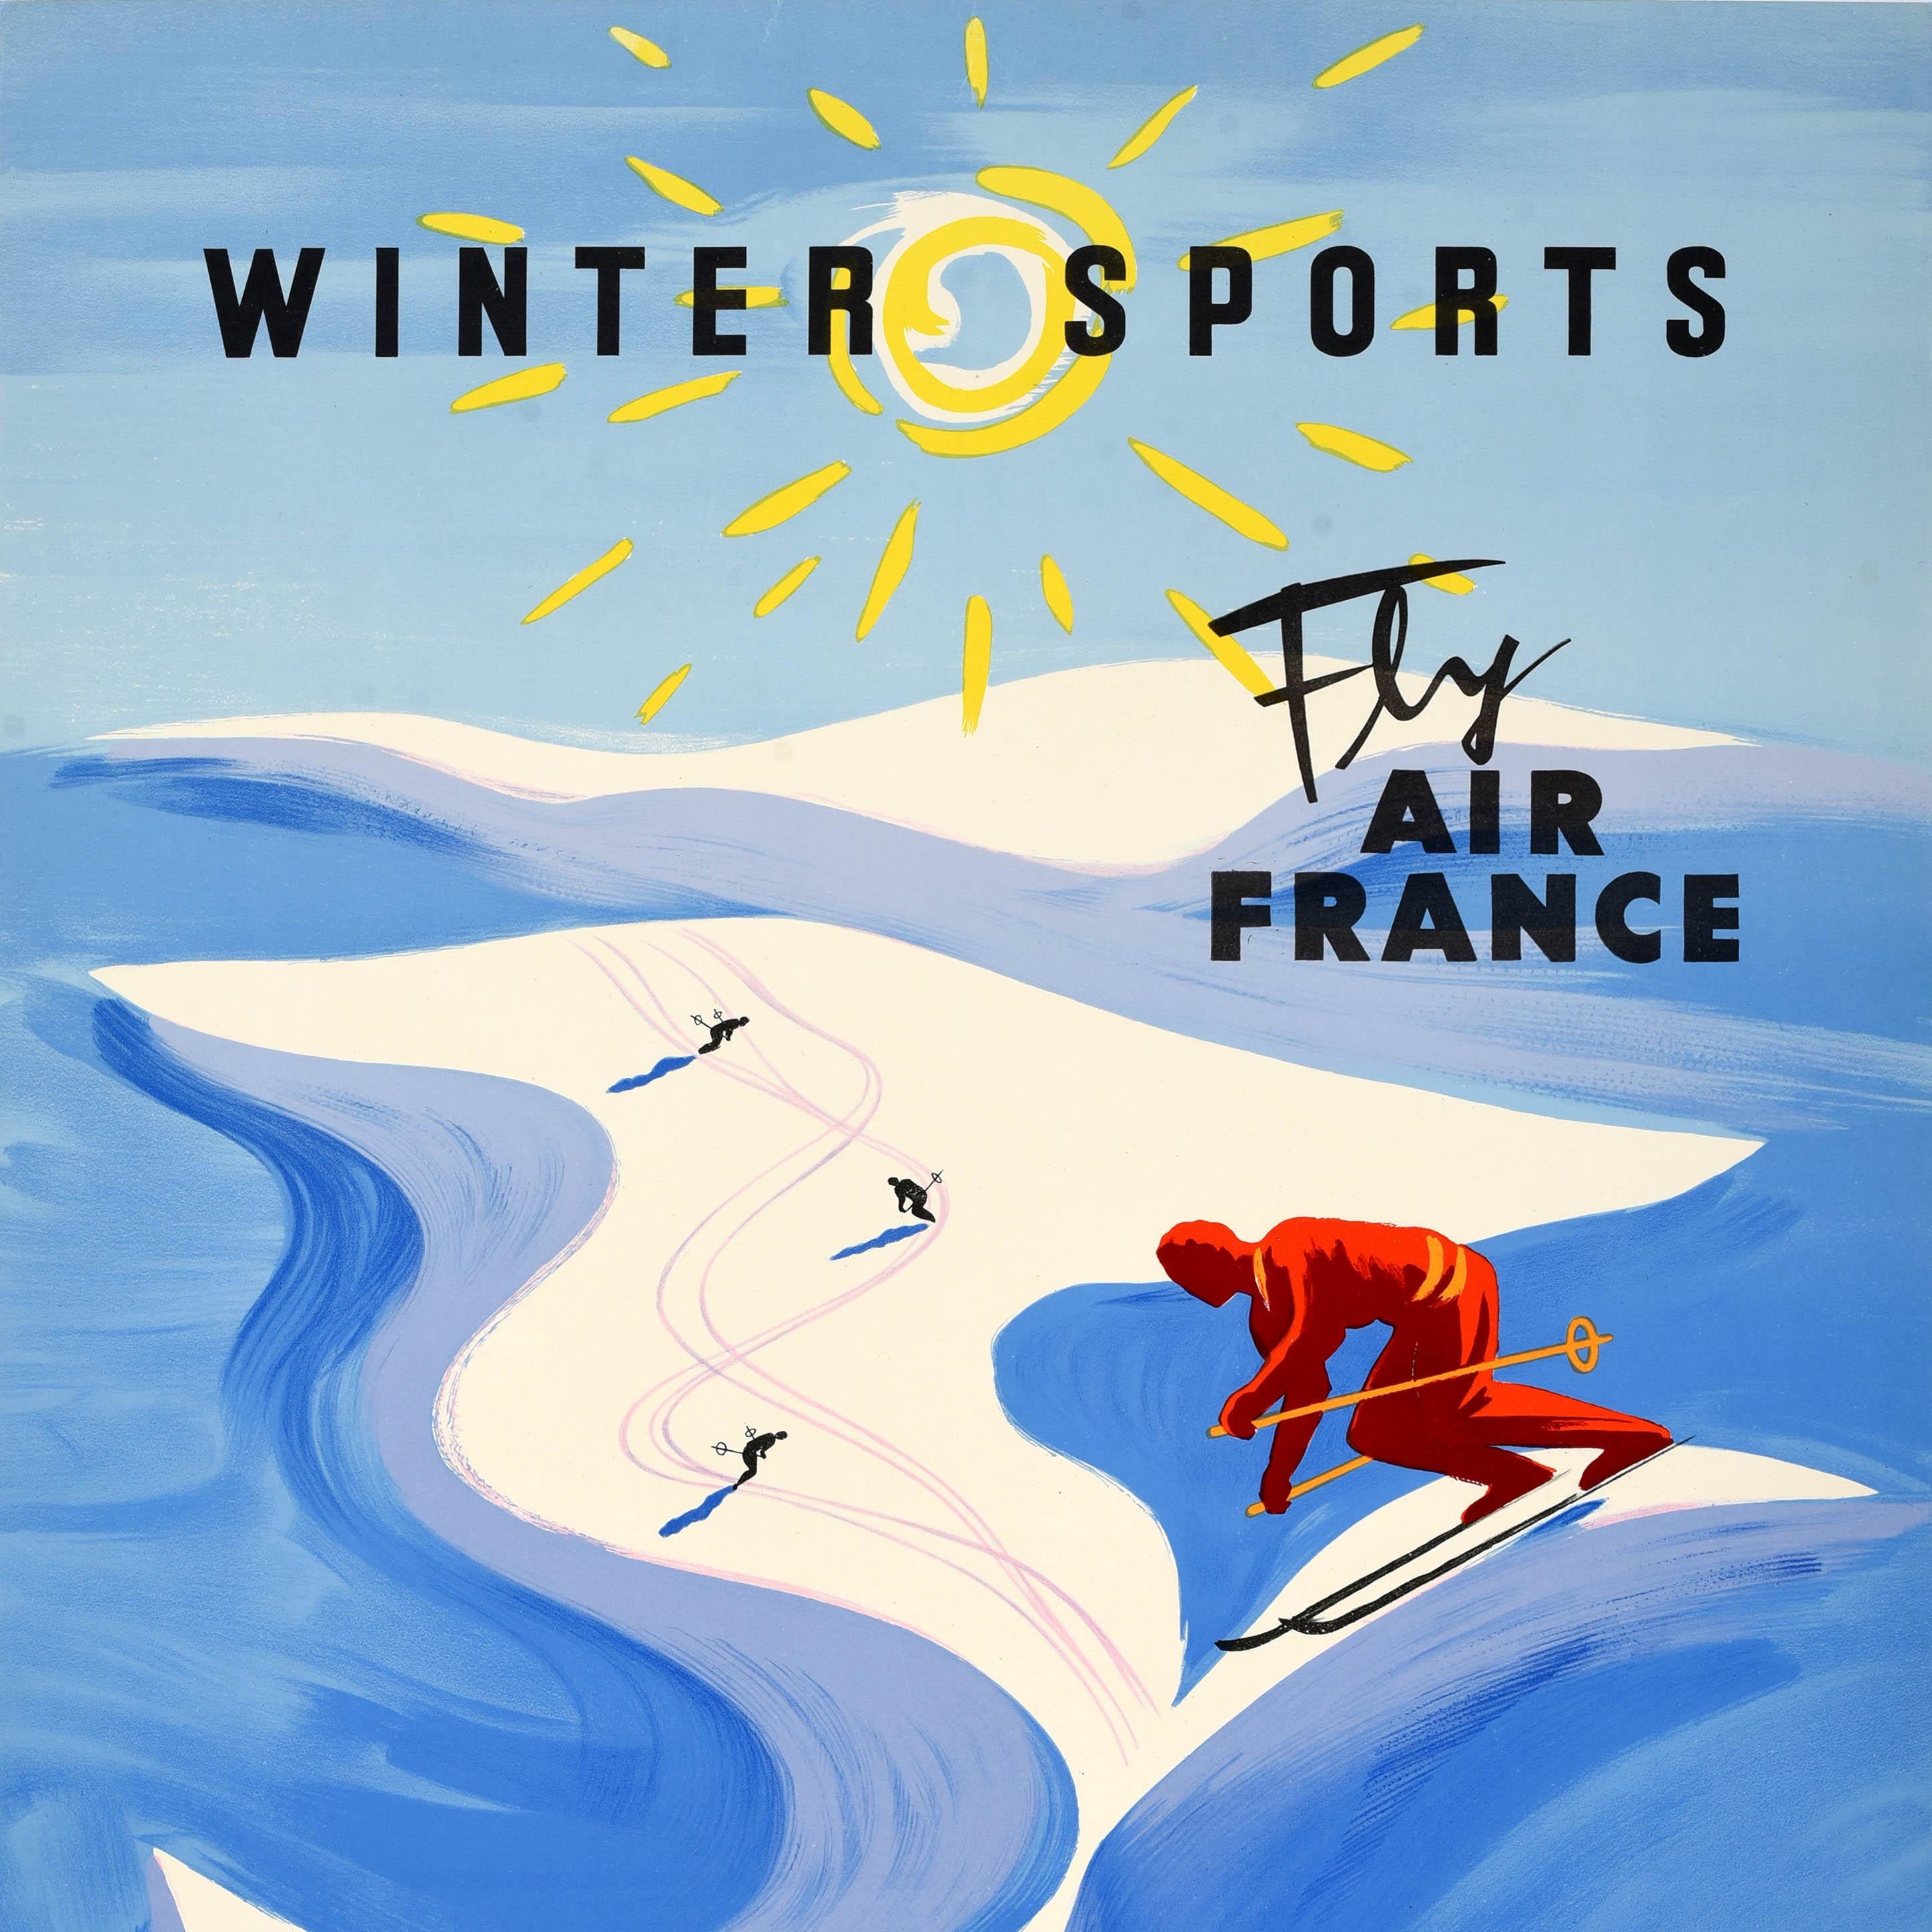 Original Vintage Ski Travel Poster Winter Sports Fly Air France Villemot Design - Blue Print by Bernard Villemot